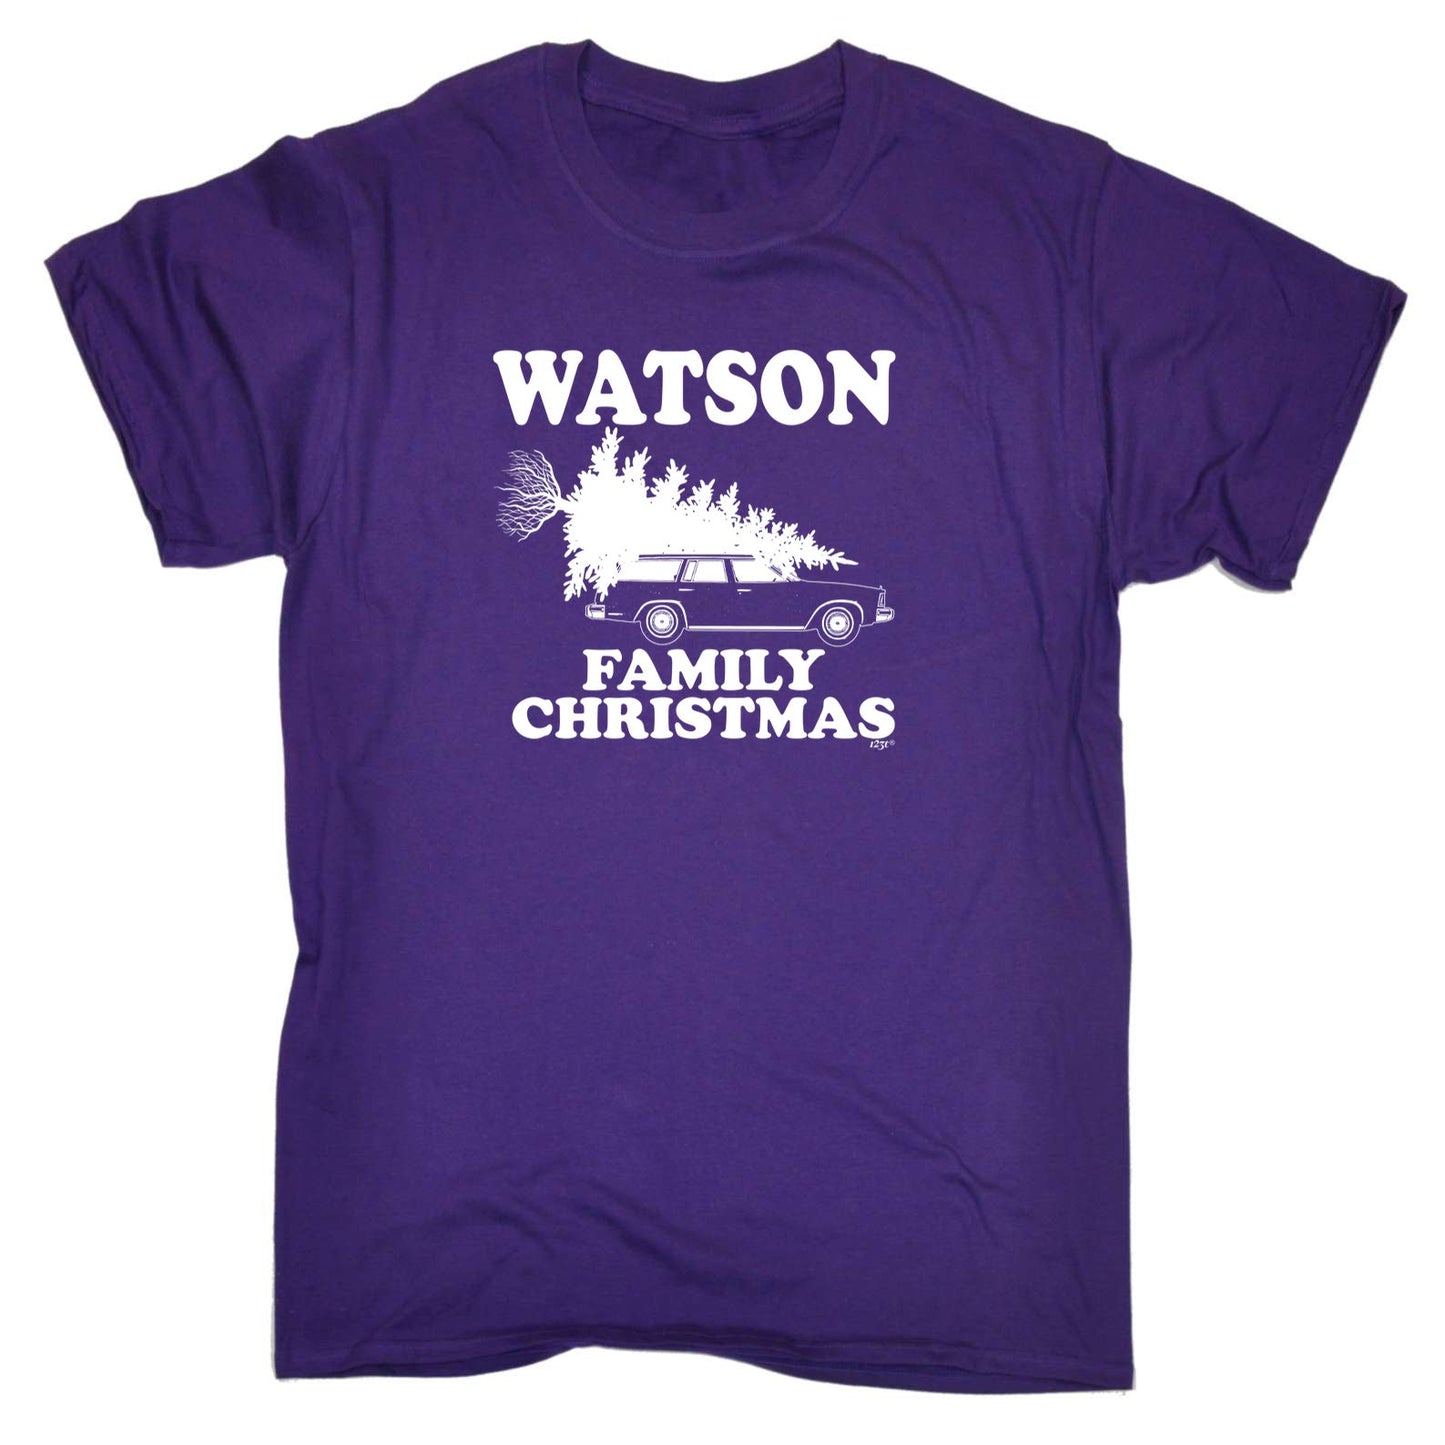 Family Christmas Watson - Mens Xmas Novelty T-Shirt / T Shirt